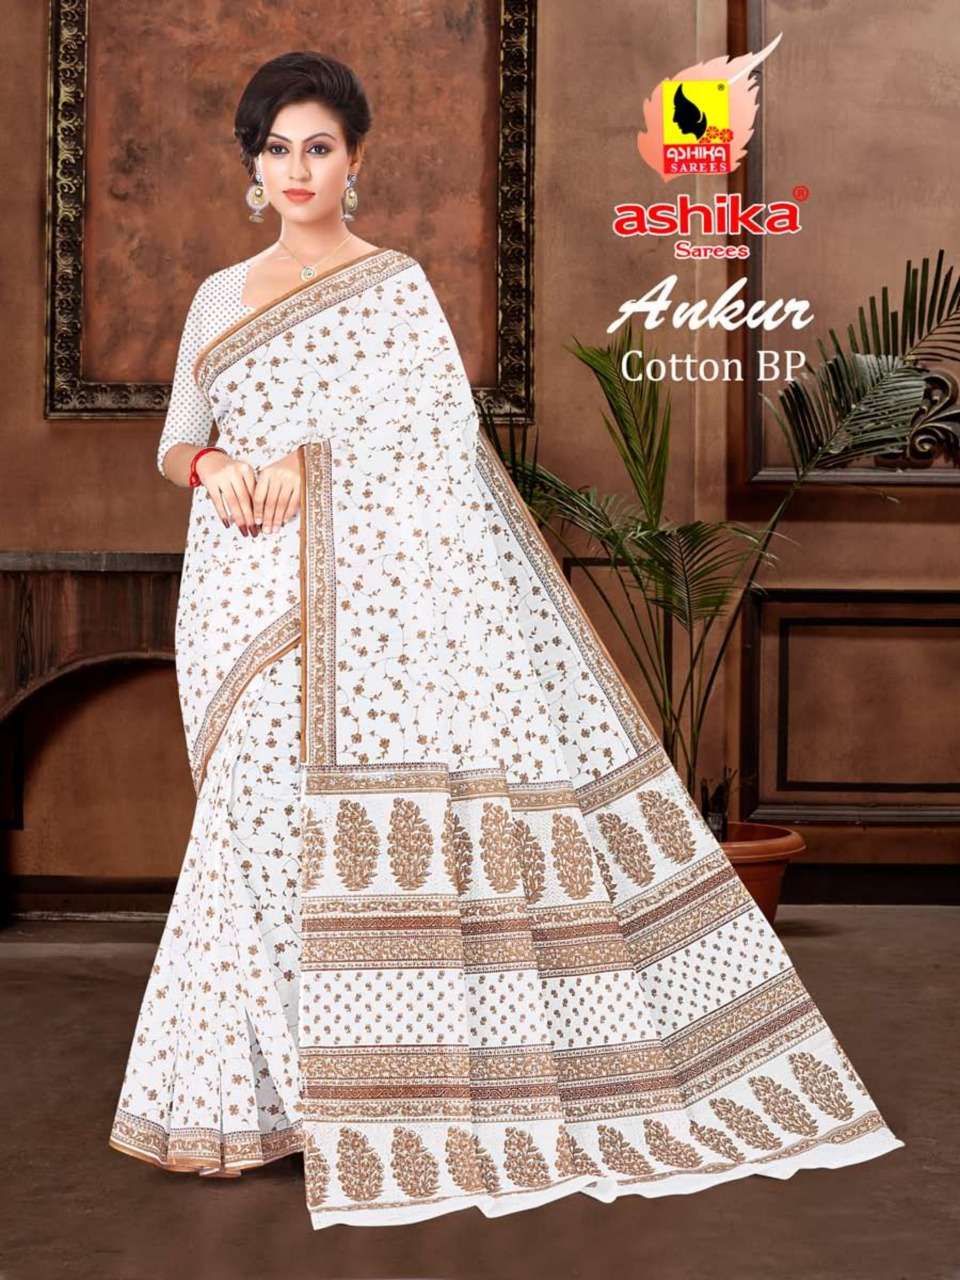 Ashika Ankur Fancy Cotton Saree Catalog Dealer